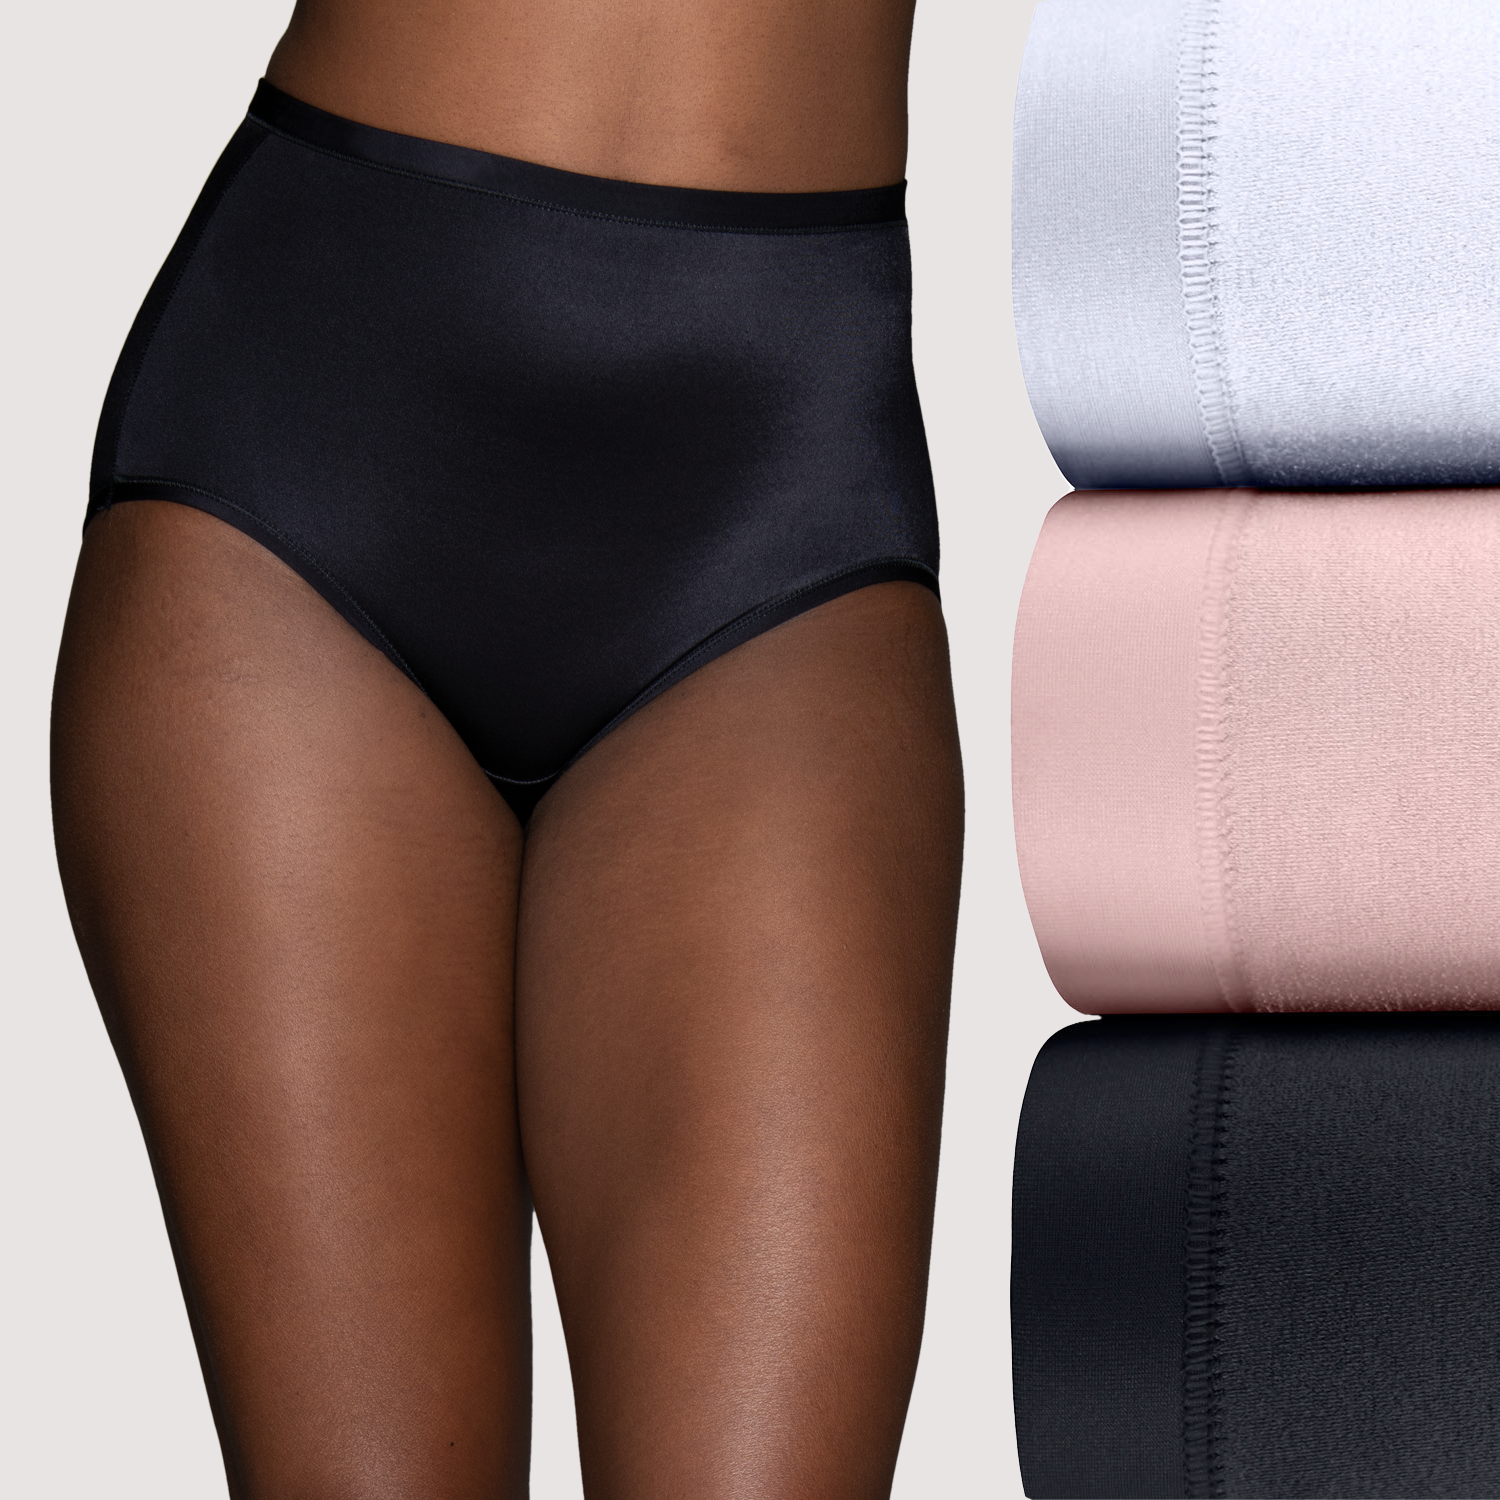 Fitwell Intimates 5 Pack Thongs Size M/L Nylon Spandex Black Blush